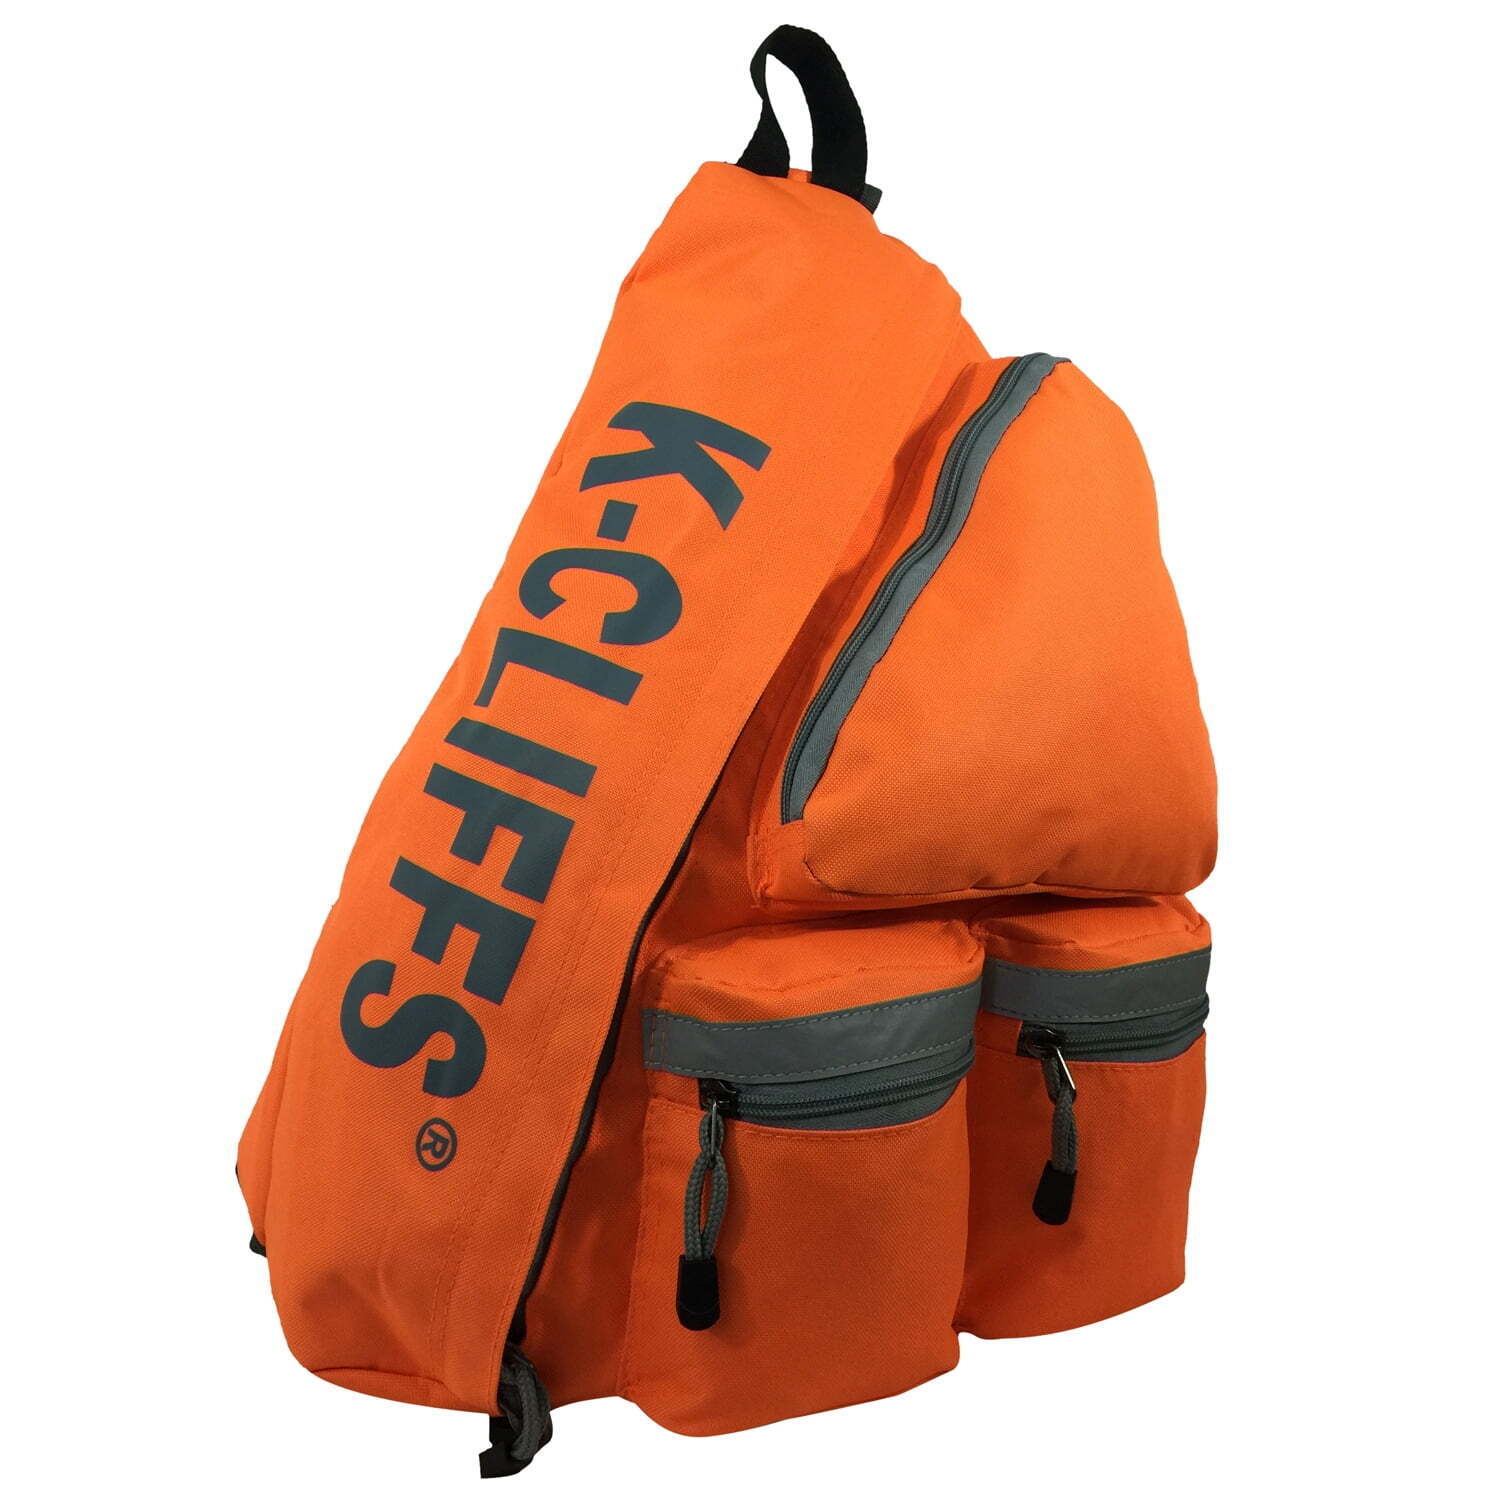 20 inch Unisex Reflective Sling Backpack Student Bookbag Travel Daypack Safety